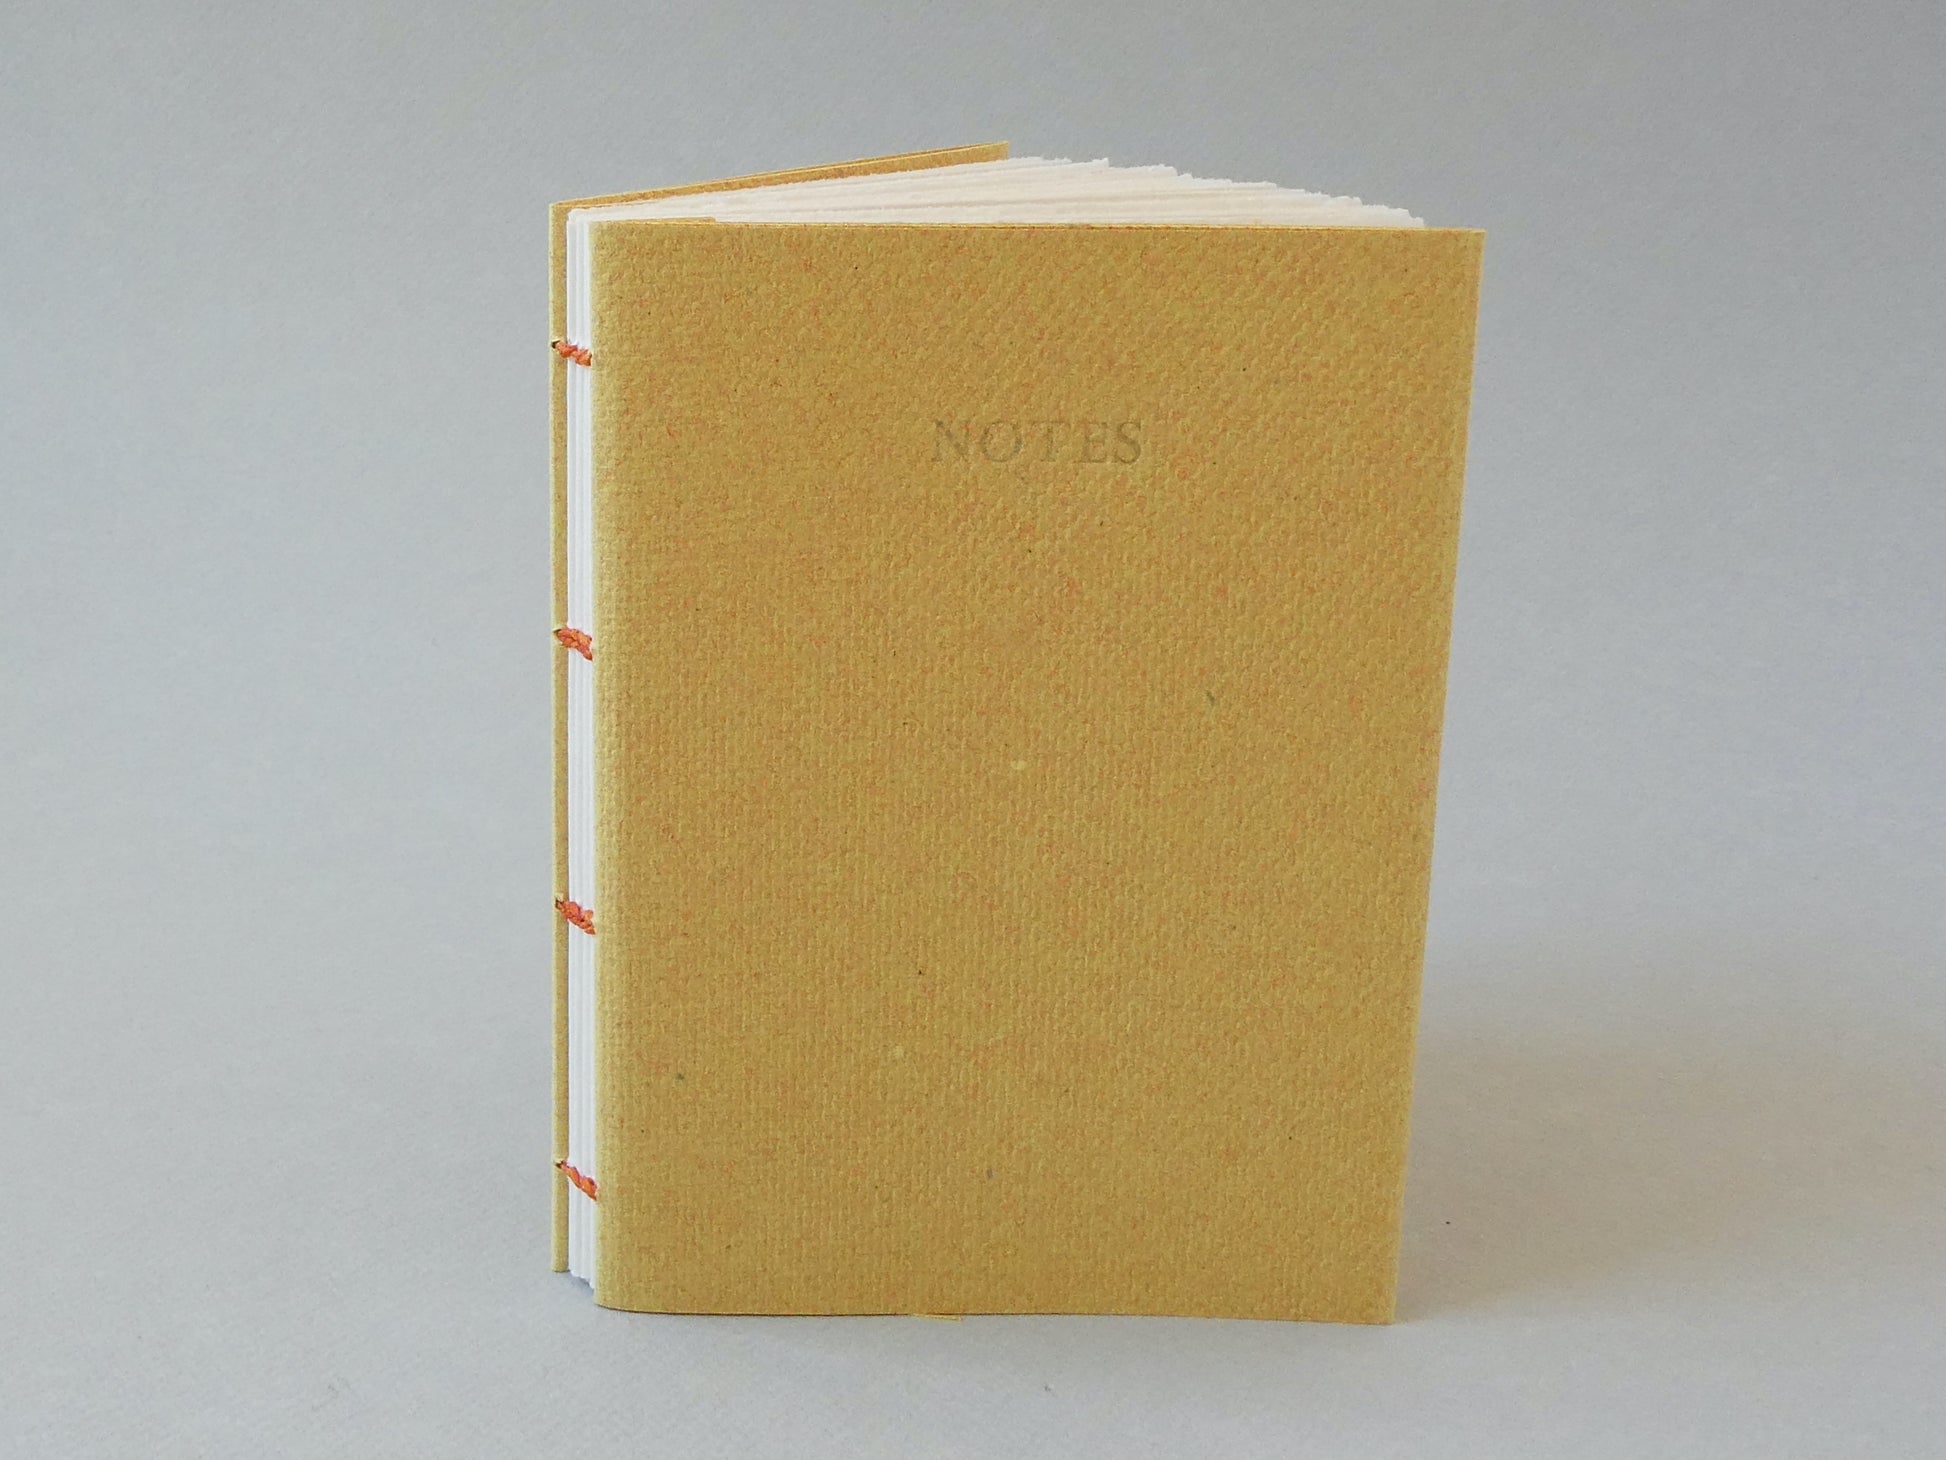 Celandine Books yellow notebook standing